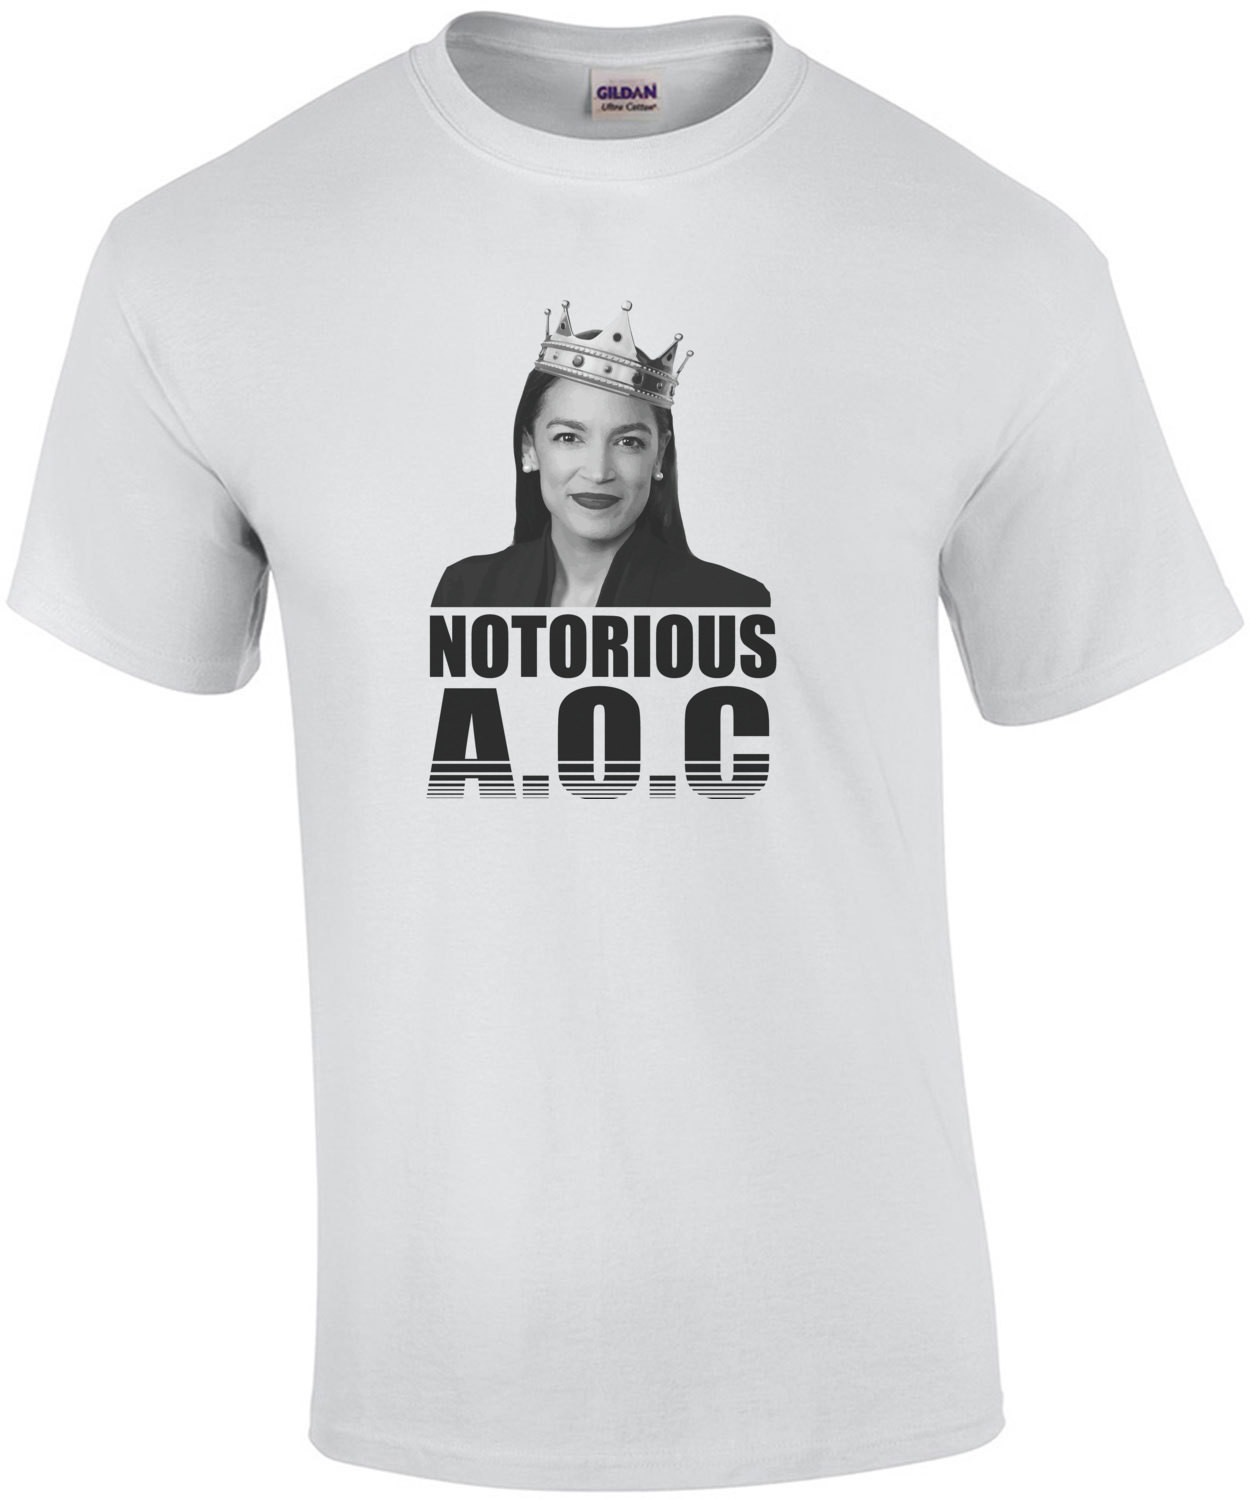 Notorious AOC - Alexandria Ocasio-Cortez T-Shirt - Election 2020 T-Shirt